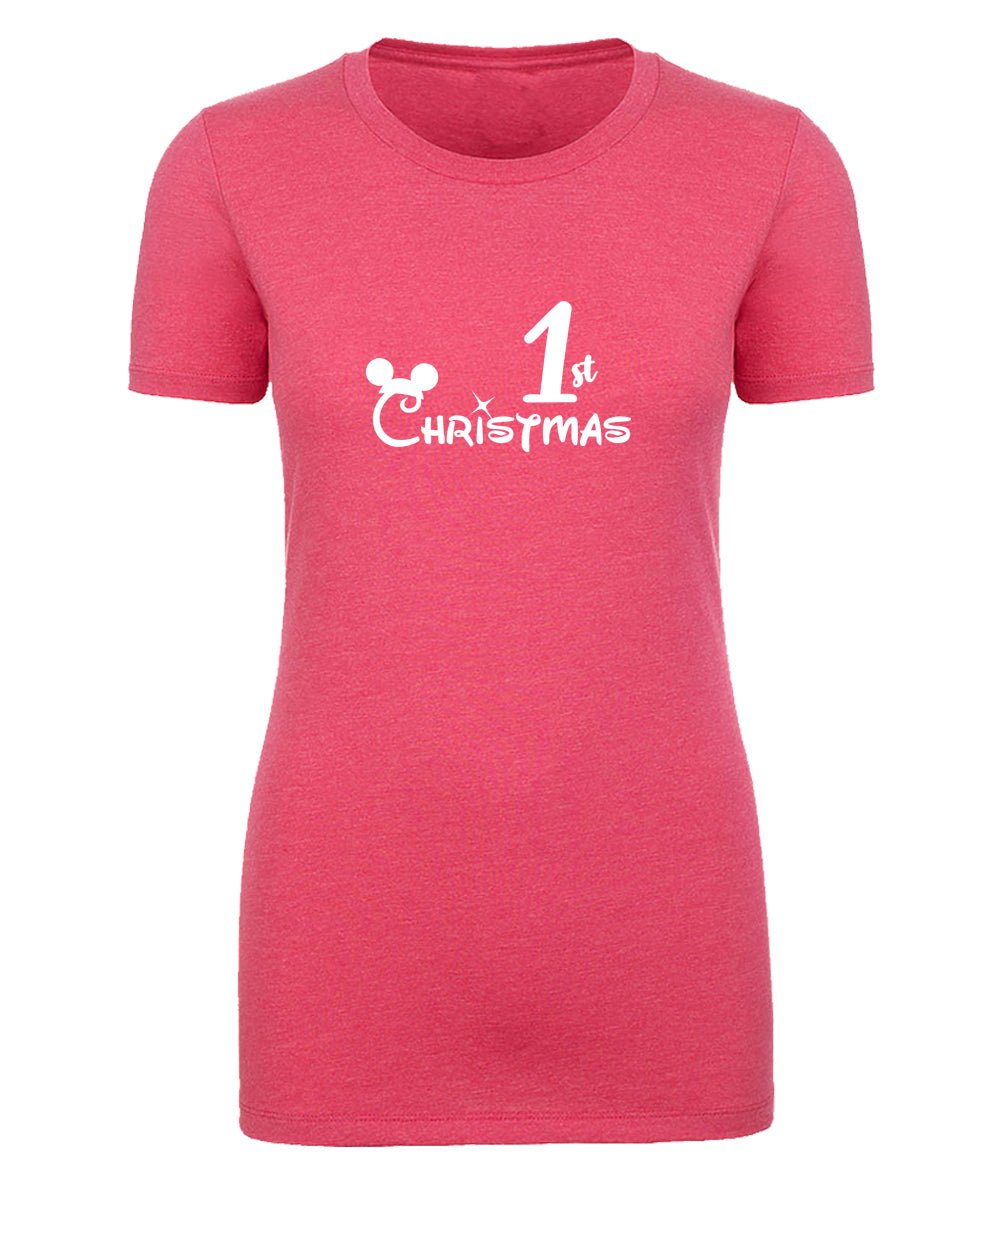 1st Christmas Womens T Shirts